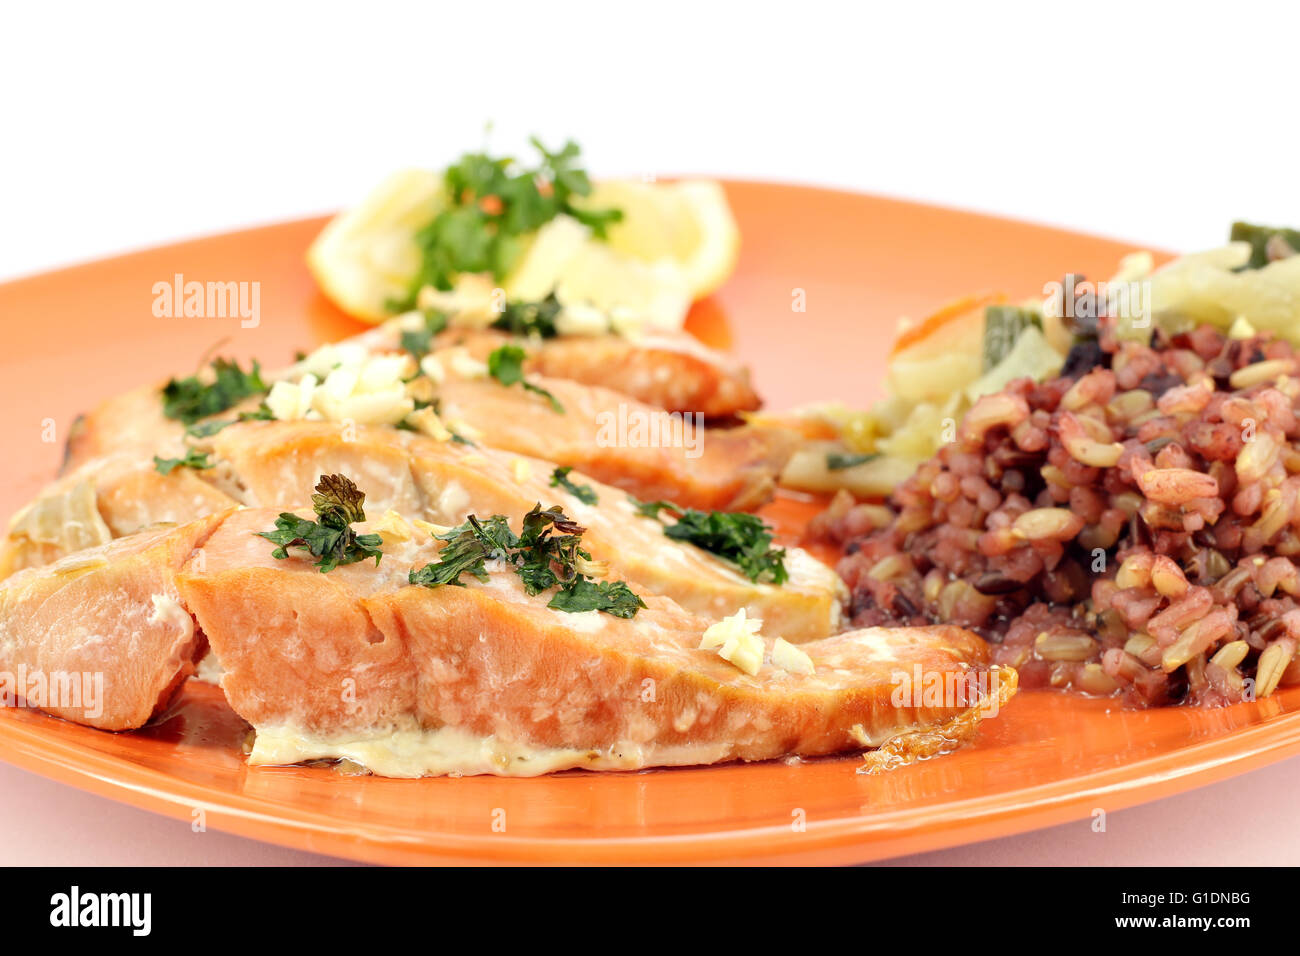 prepared seafood salmon with salad Stock Photo